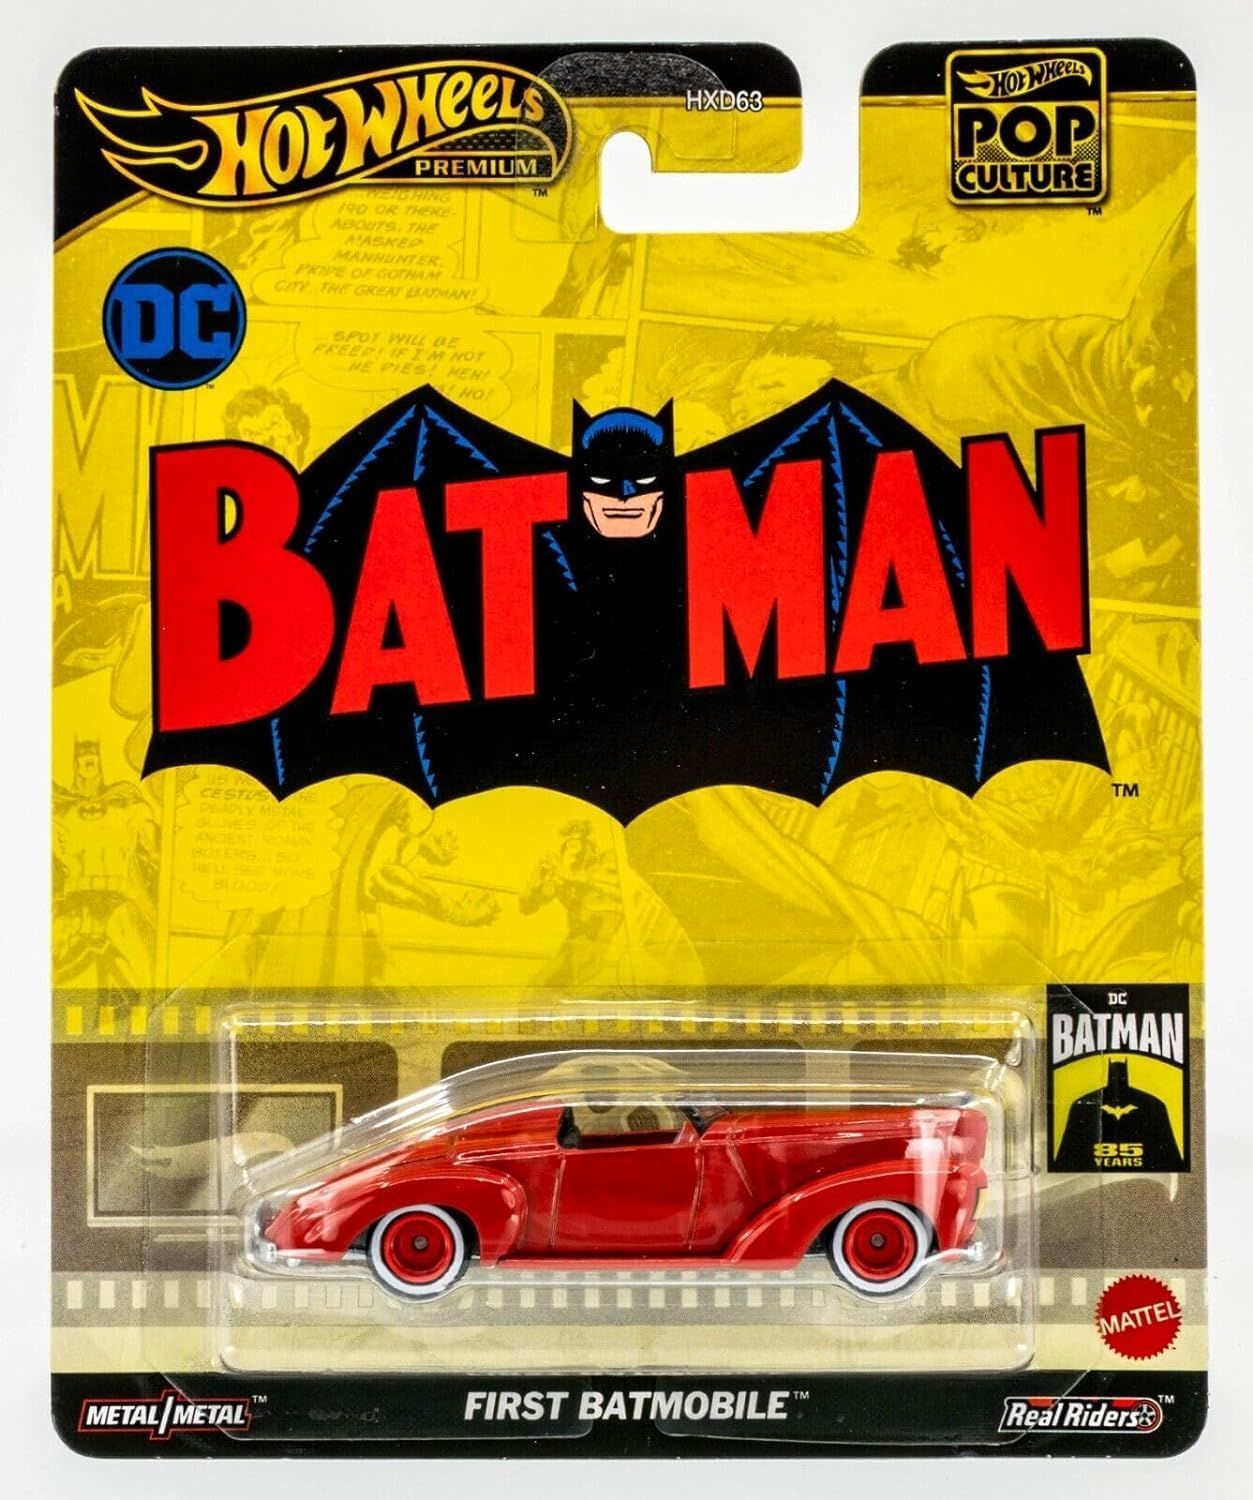 Hot Wheels Premium Pop Culture DC Batman First Batmobile HVJ40